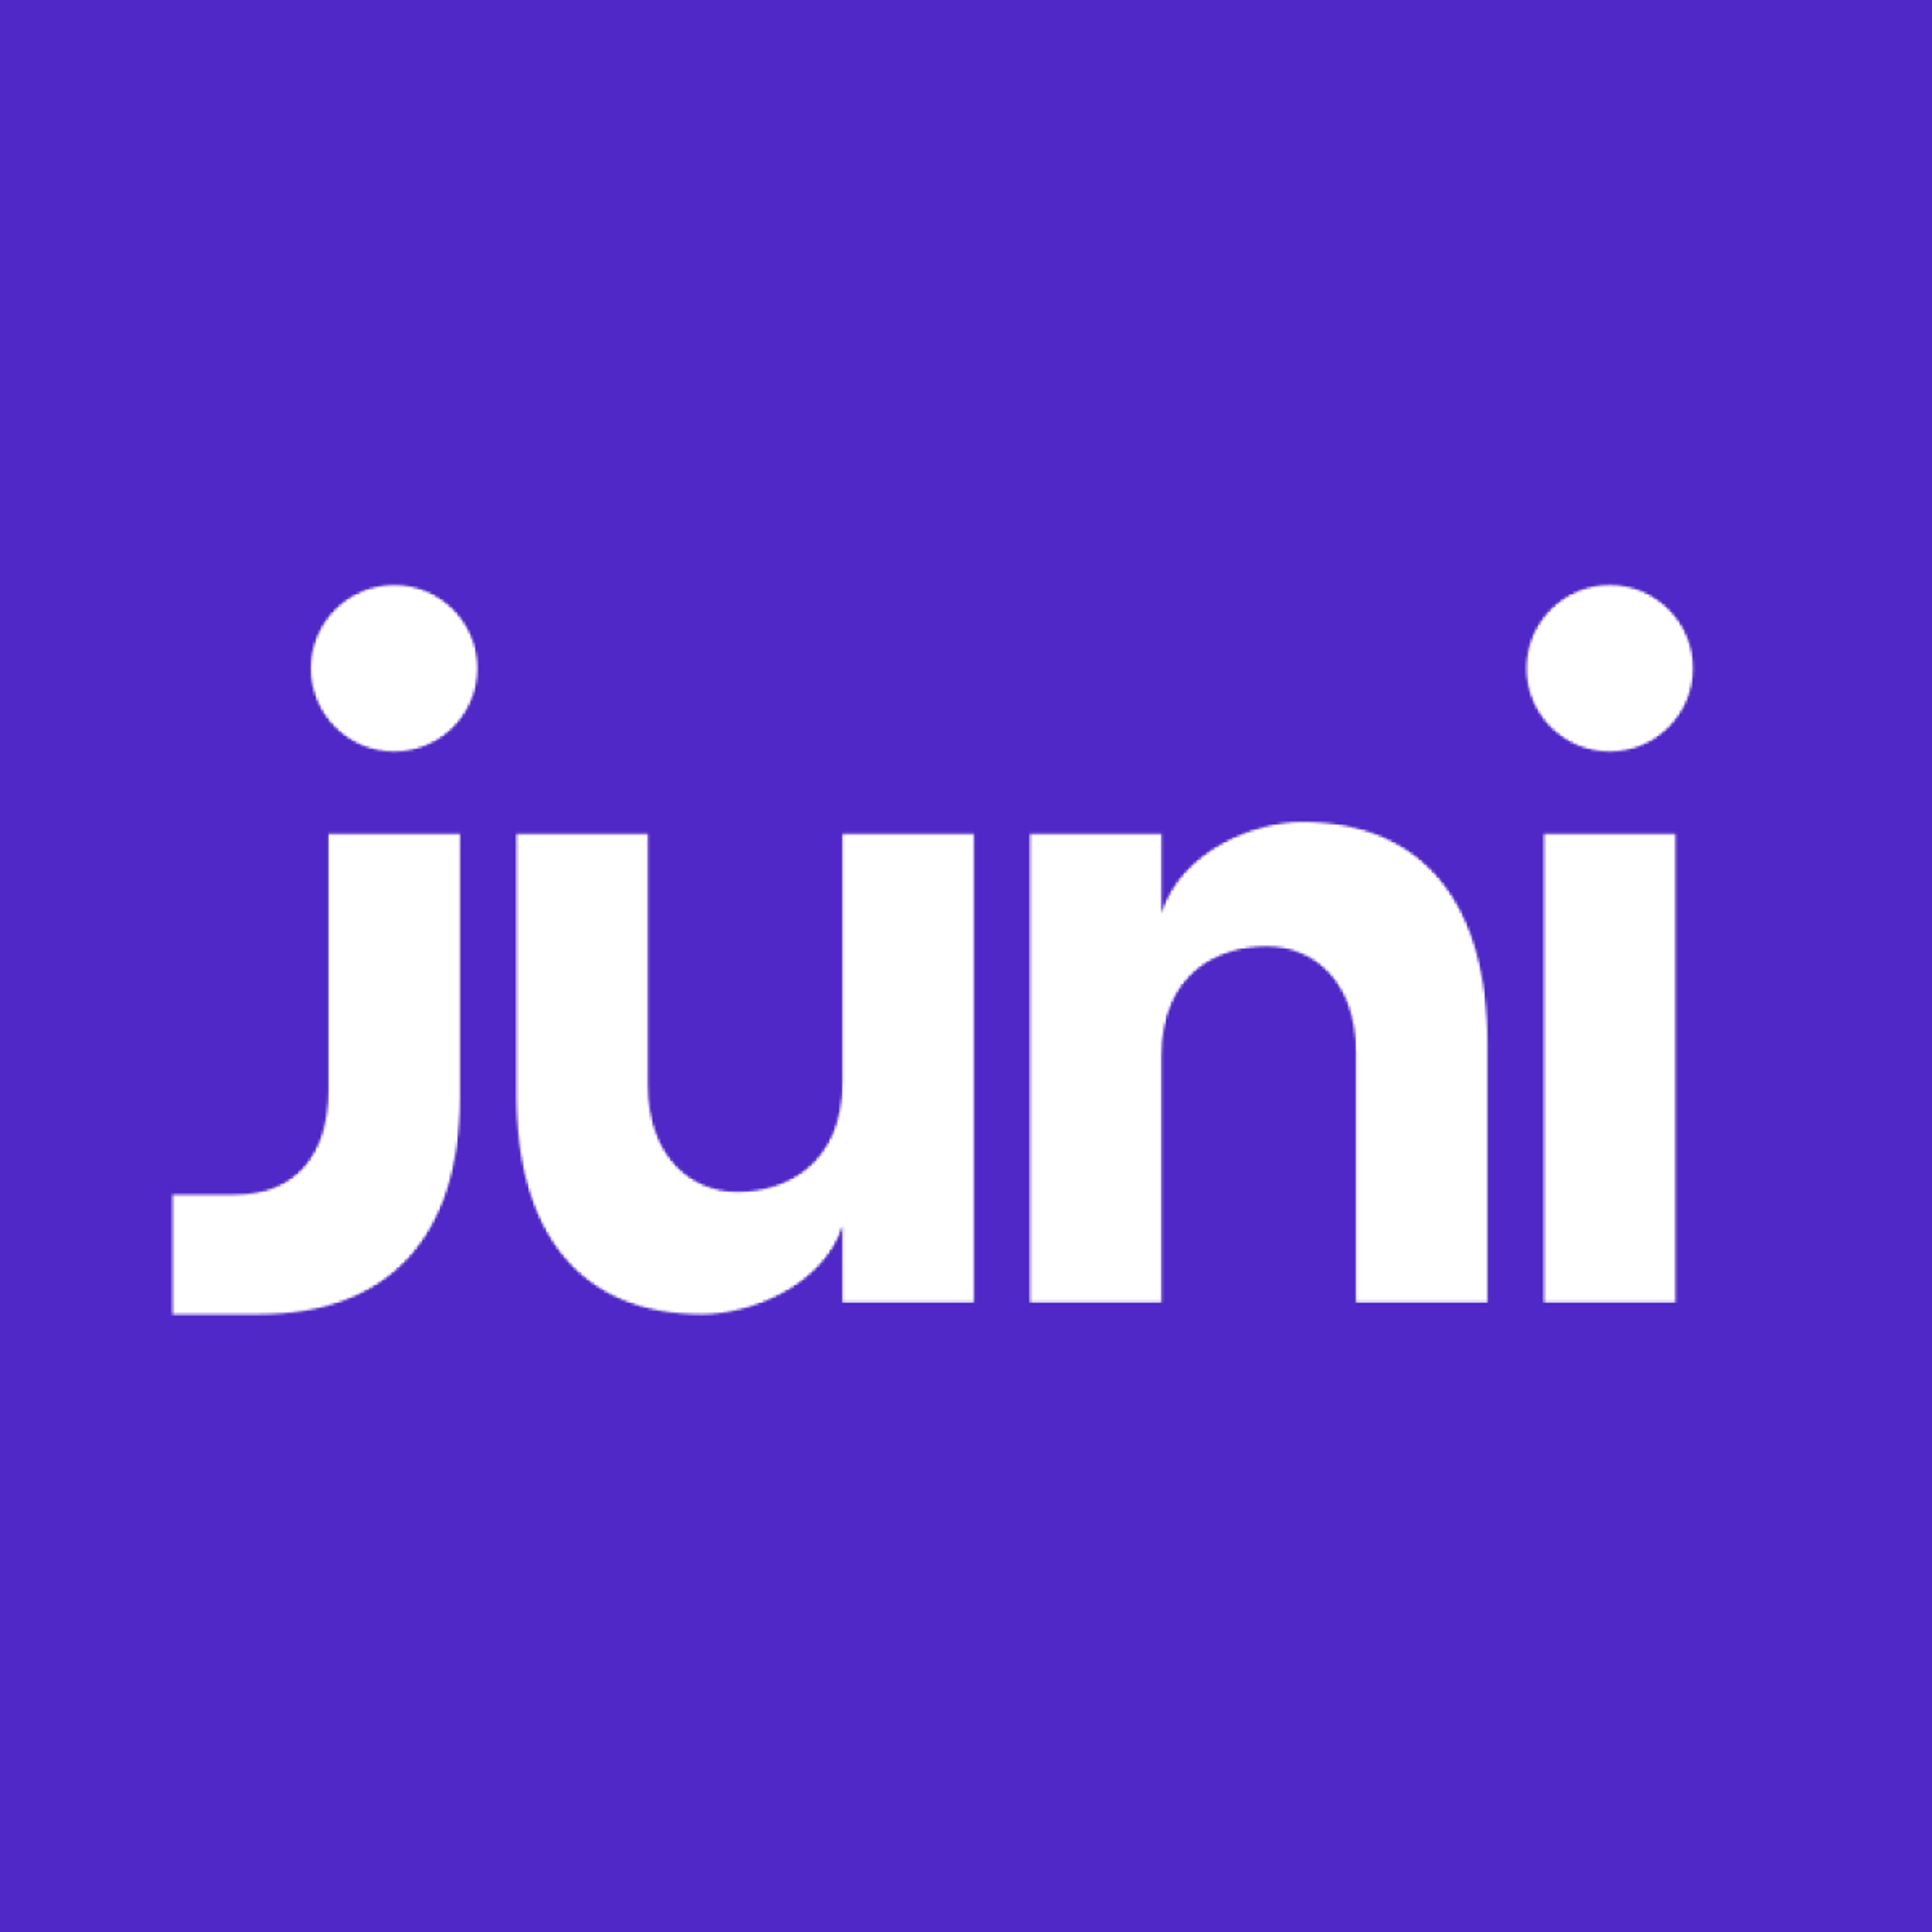 Juni Learning